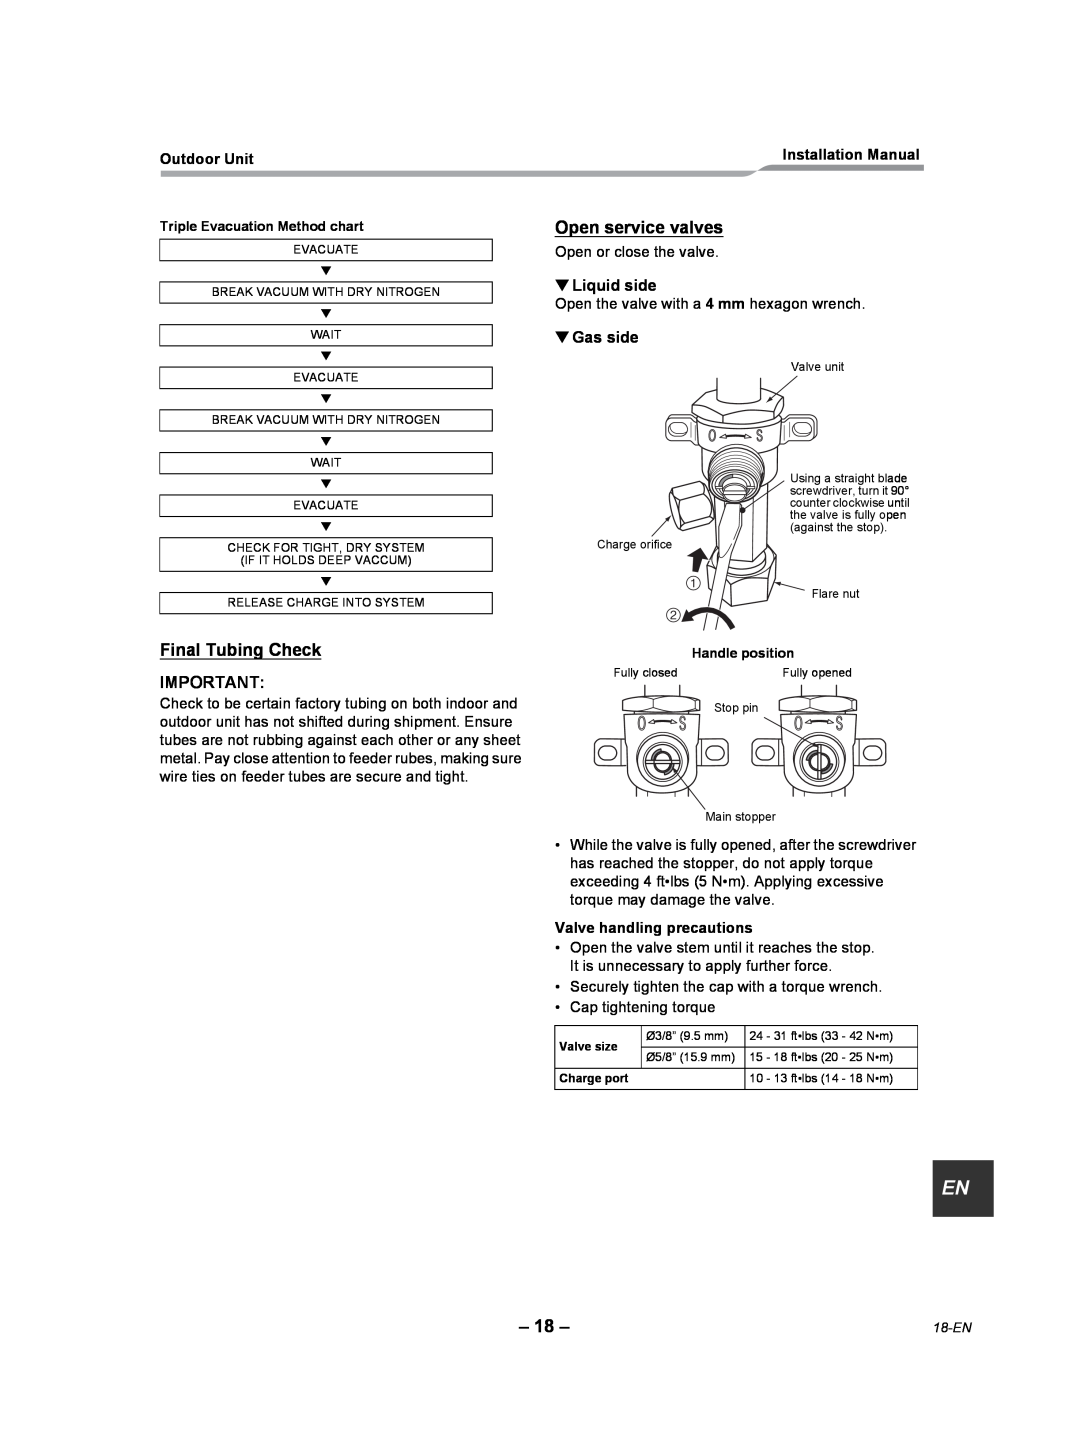 Toshiba RAV-SP240AT2-UL installation manual Final Tubing Check, Open service valves, Liquid side, Gas side 